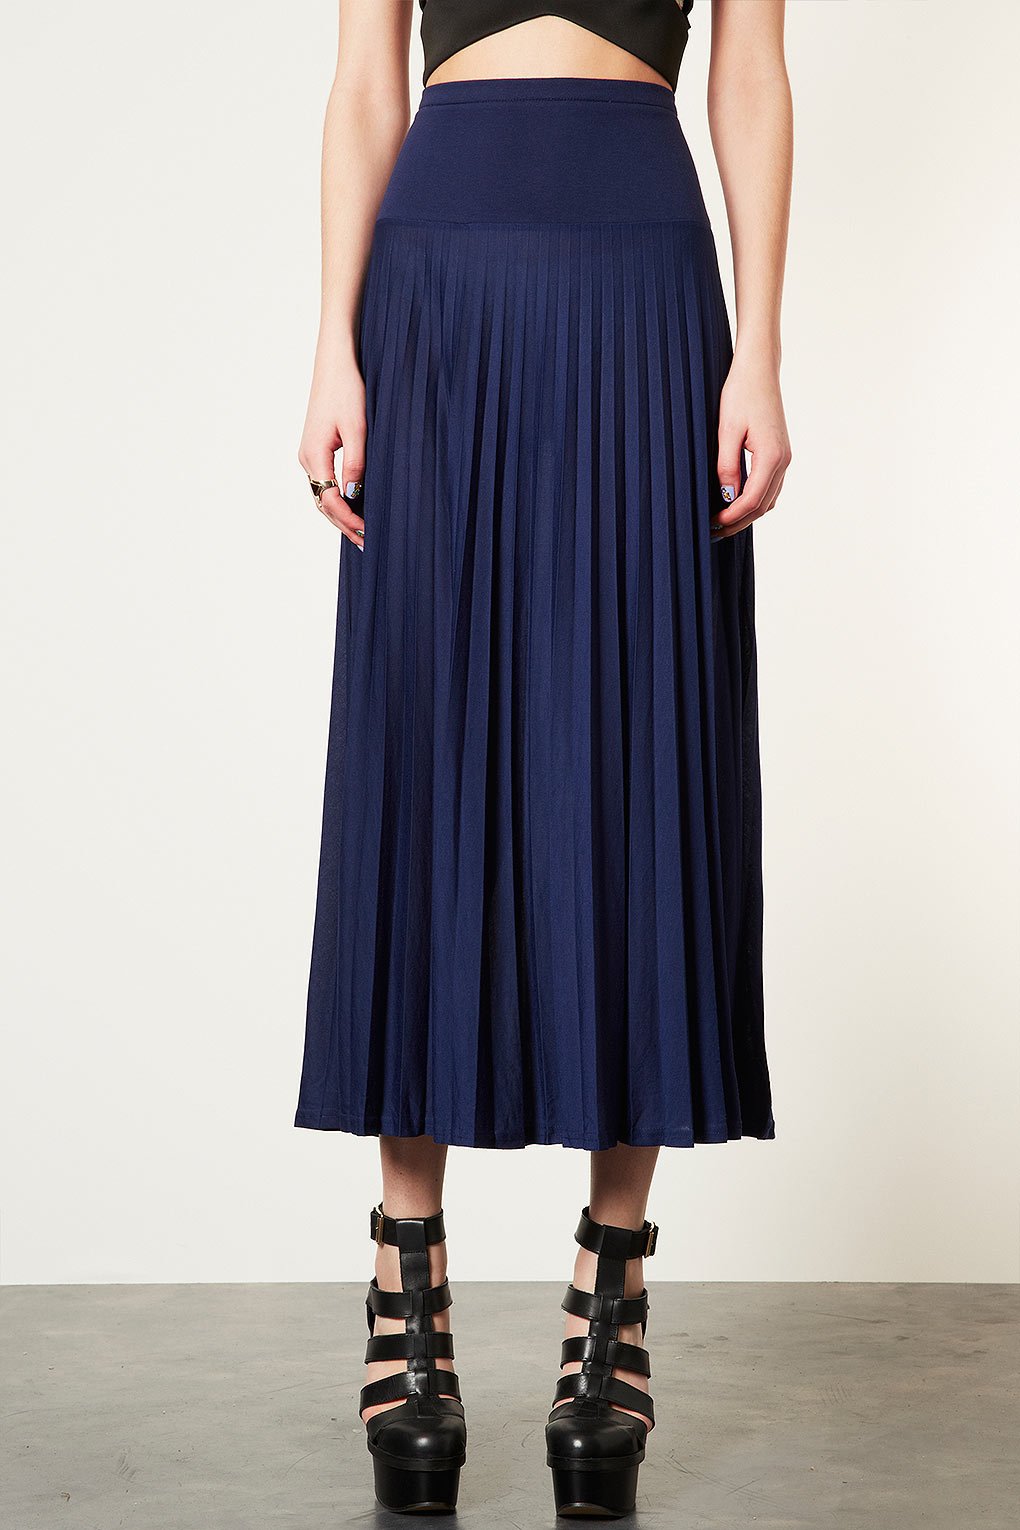 Topshop High Waist Pleated Maxi Skirt in Blue | Lyst